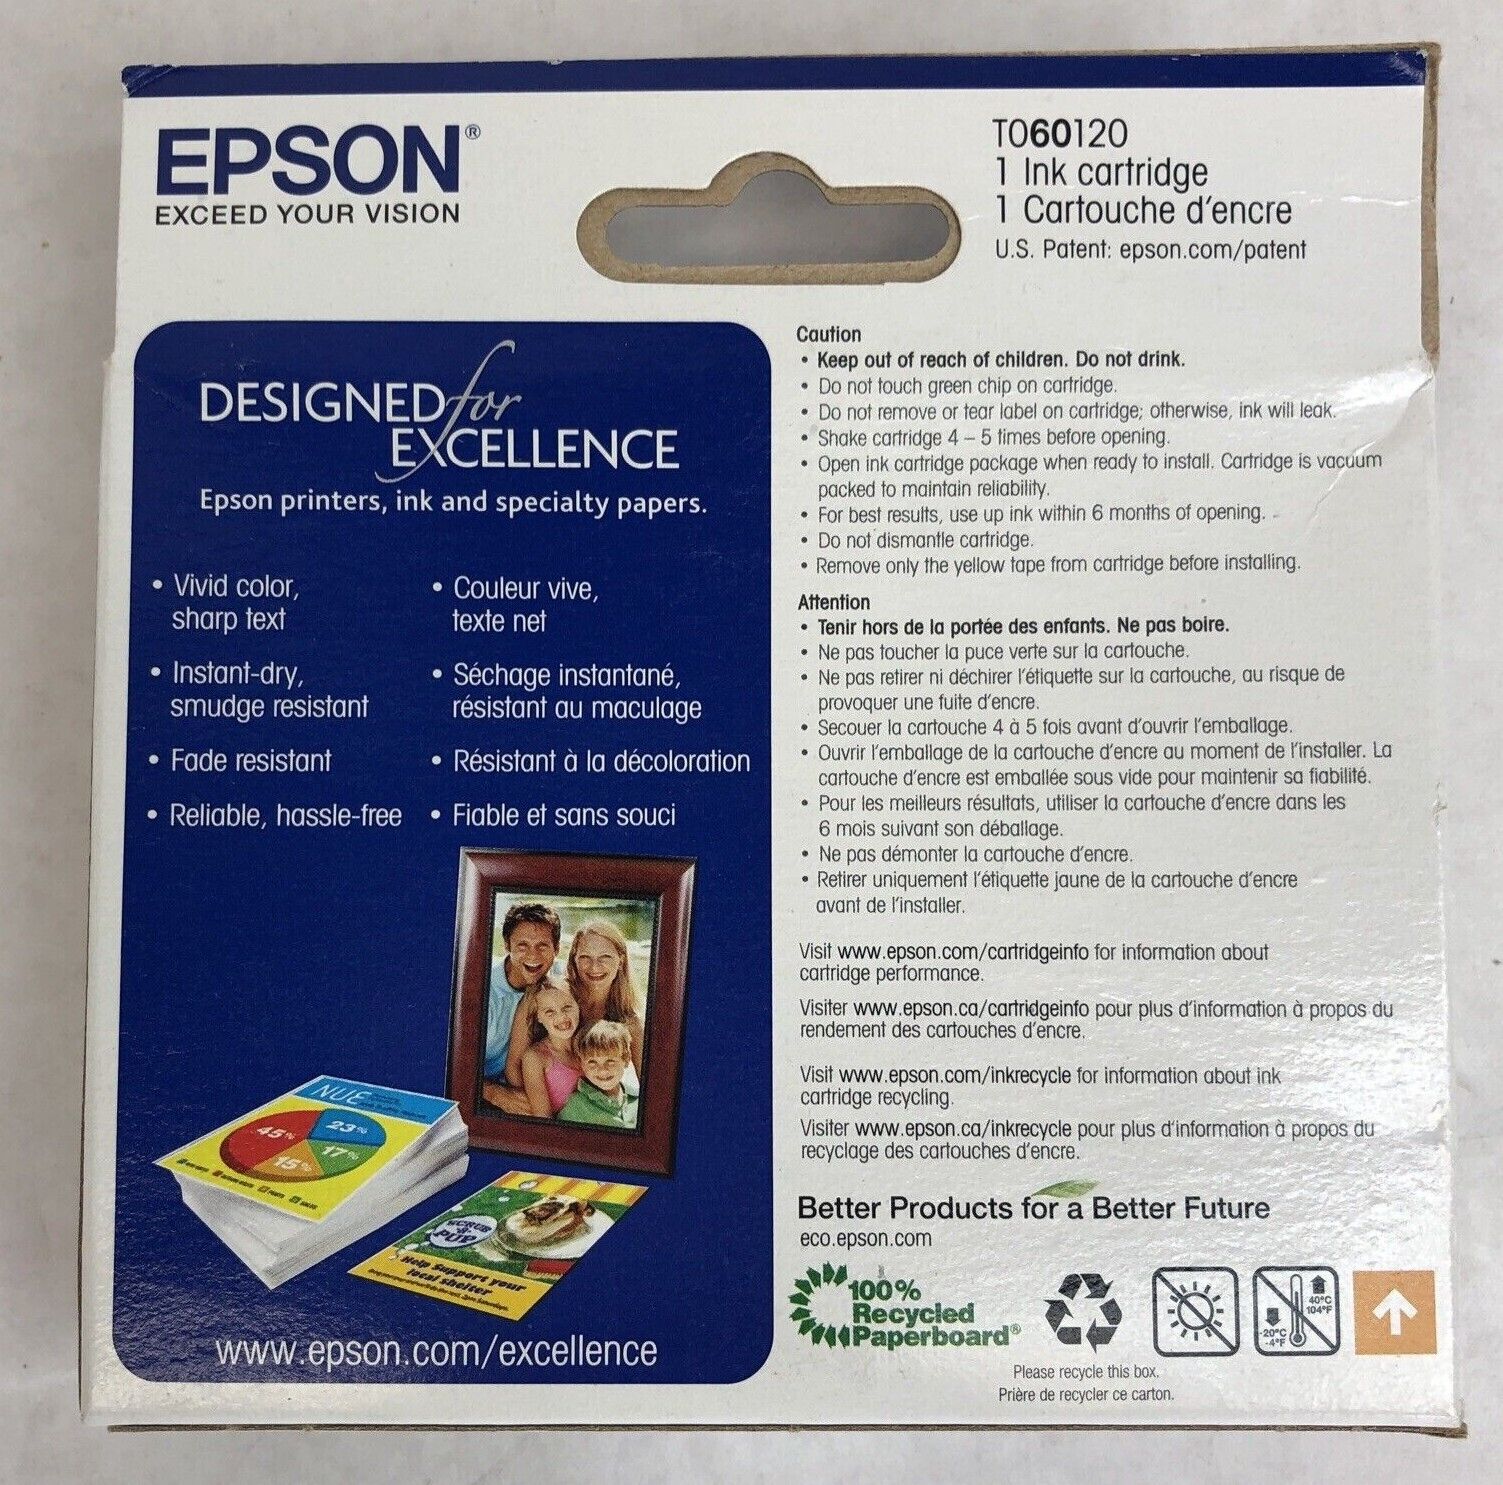 EPSON 60 Standard Capacity Black Ink